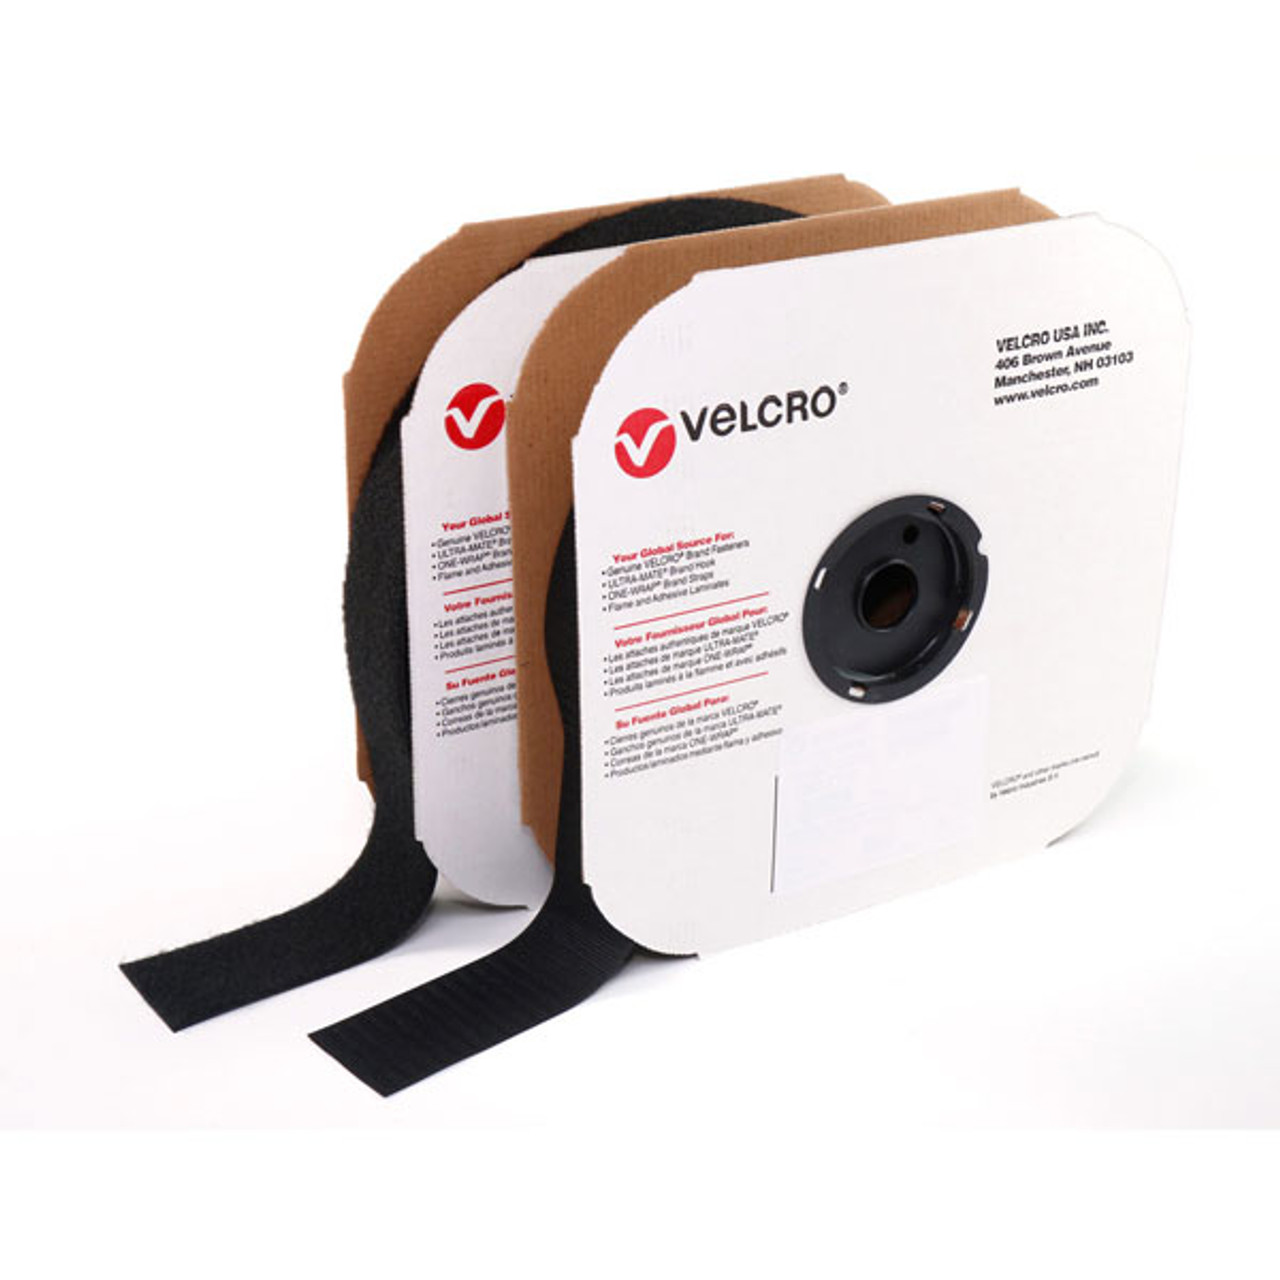 VELCRO® Brand Industrial Grade Sew On Tape